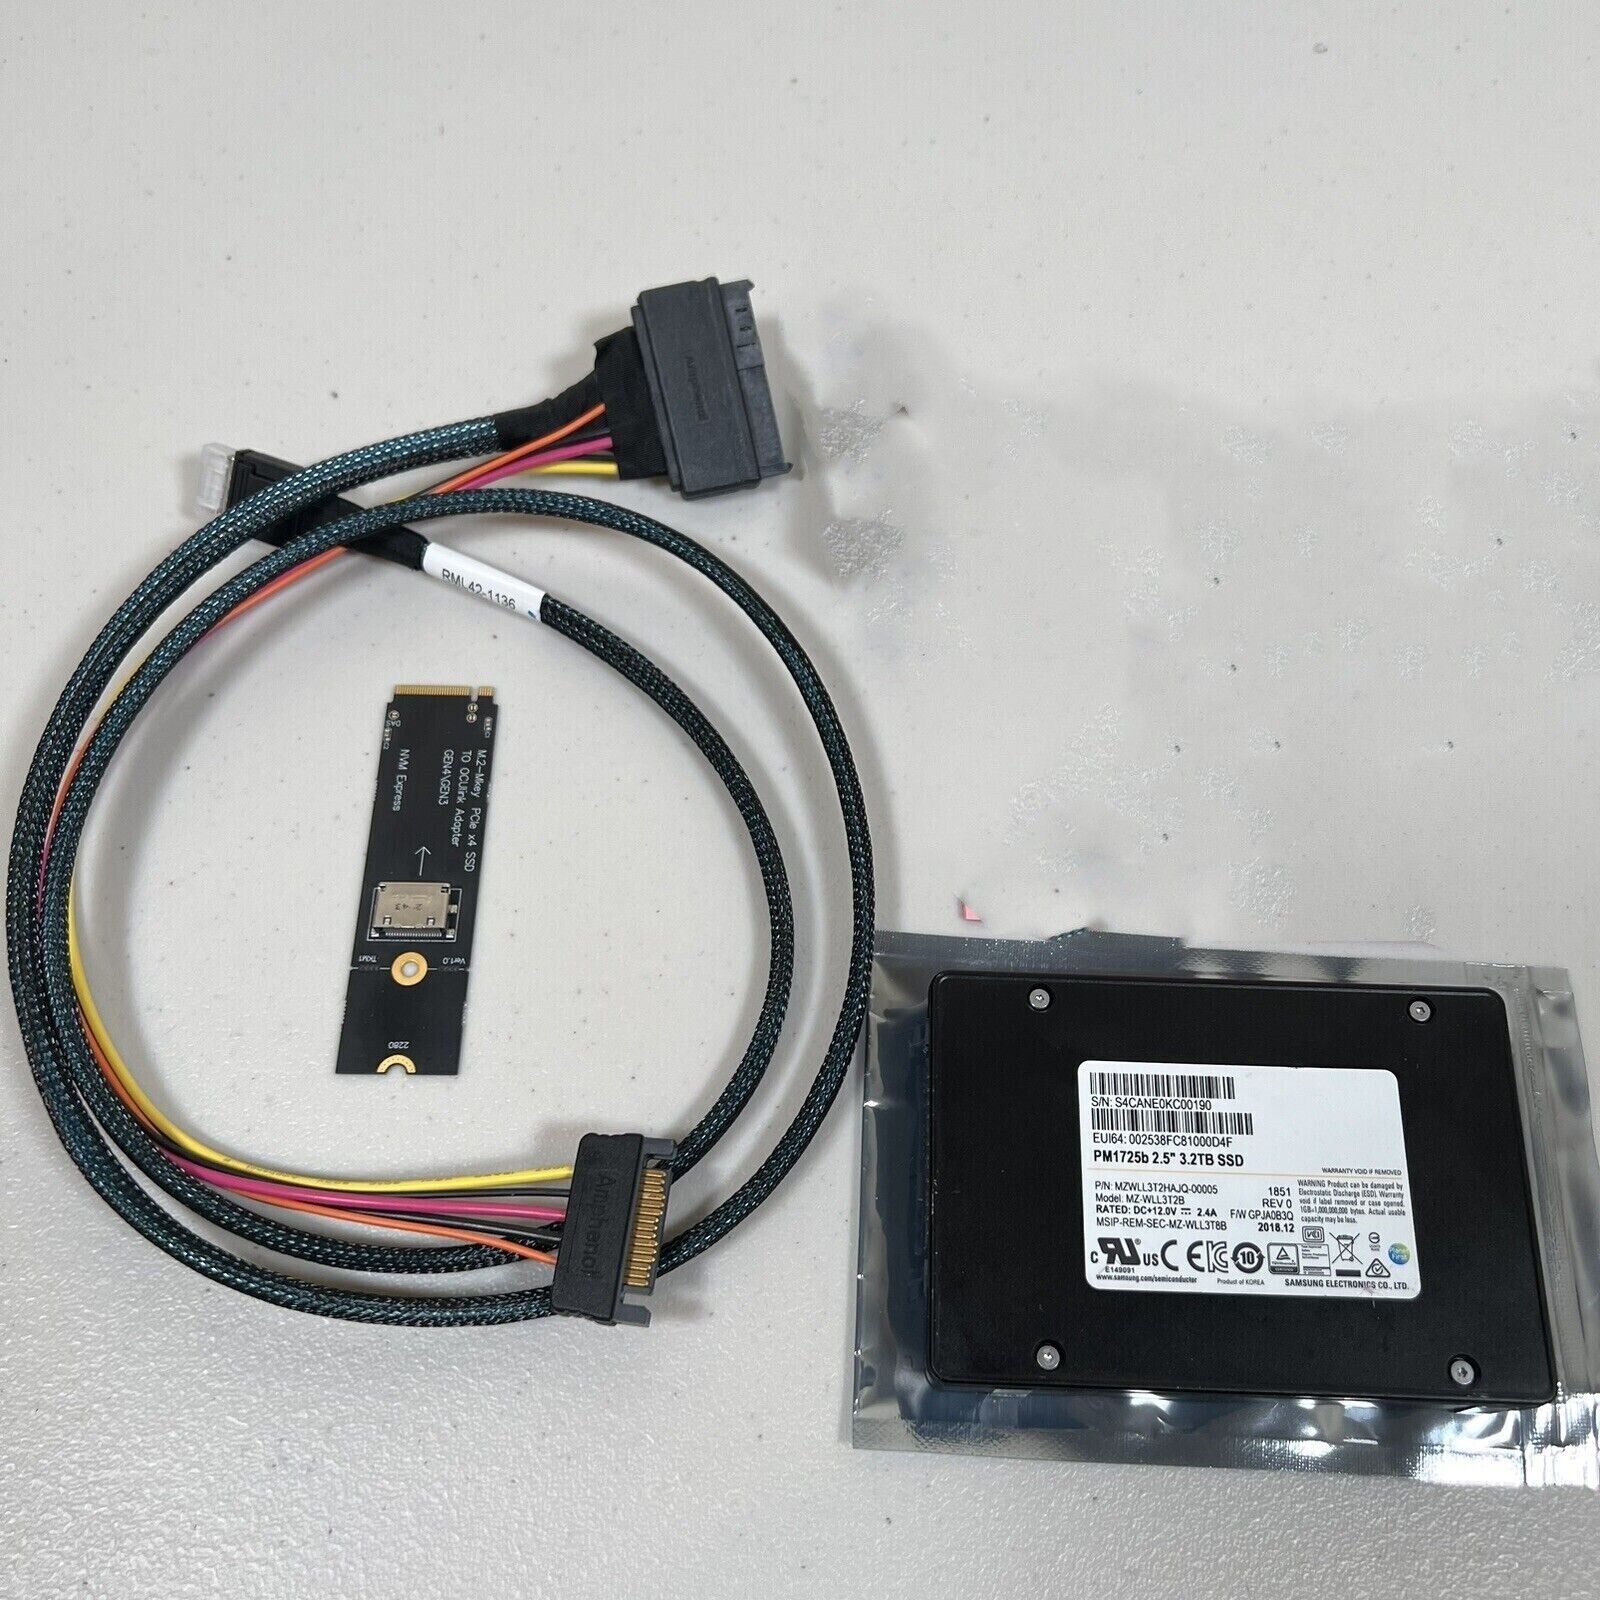 3DWPD 3.2TB PM1725b Samsung U.2 SSD PCIe with to M.2 NVMe ssd Adapter